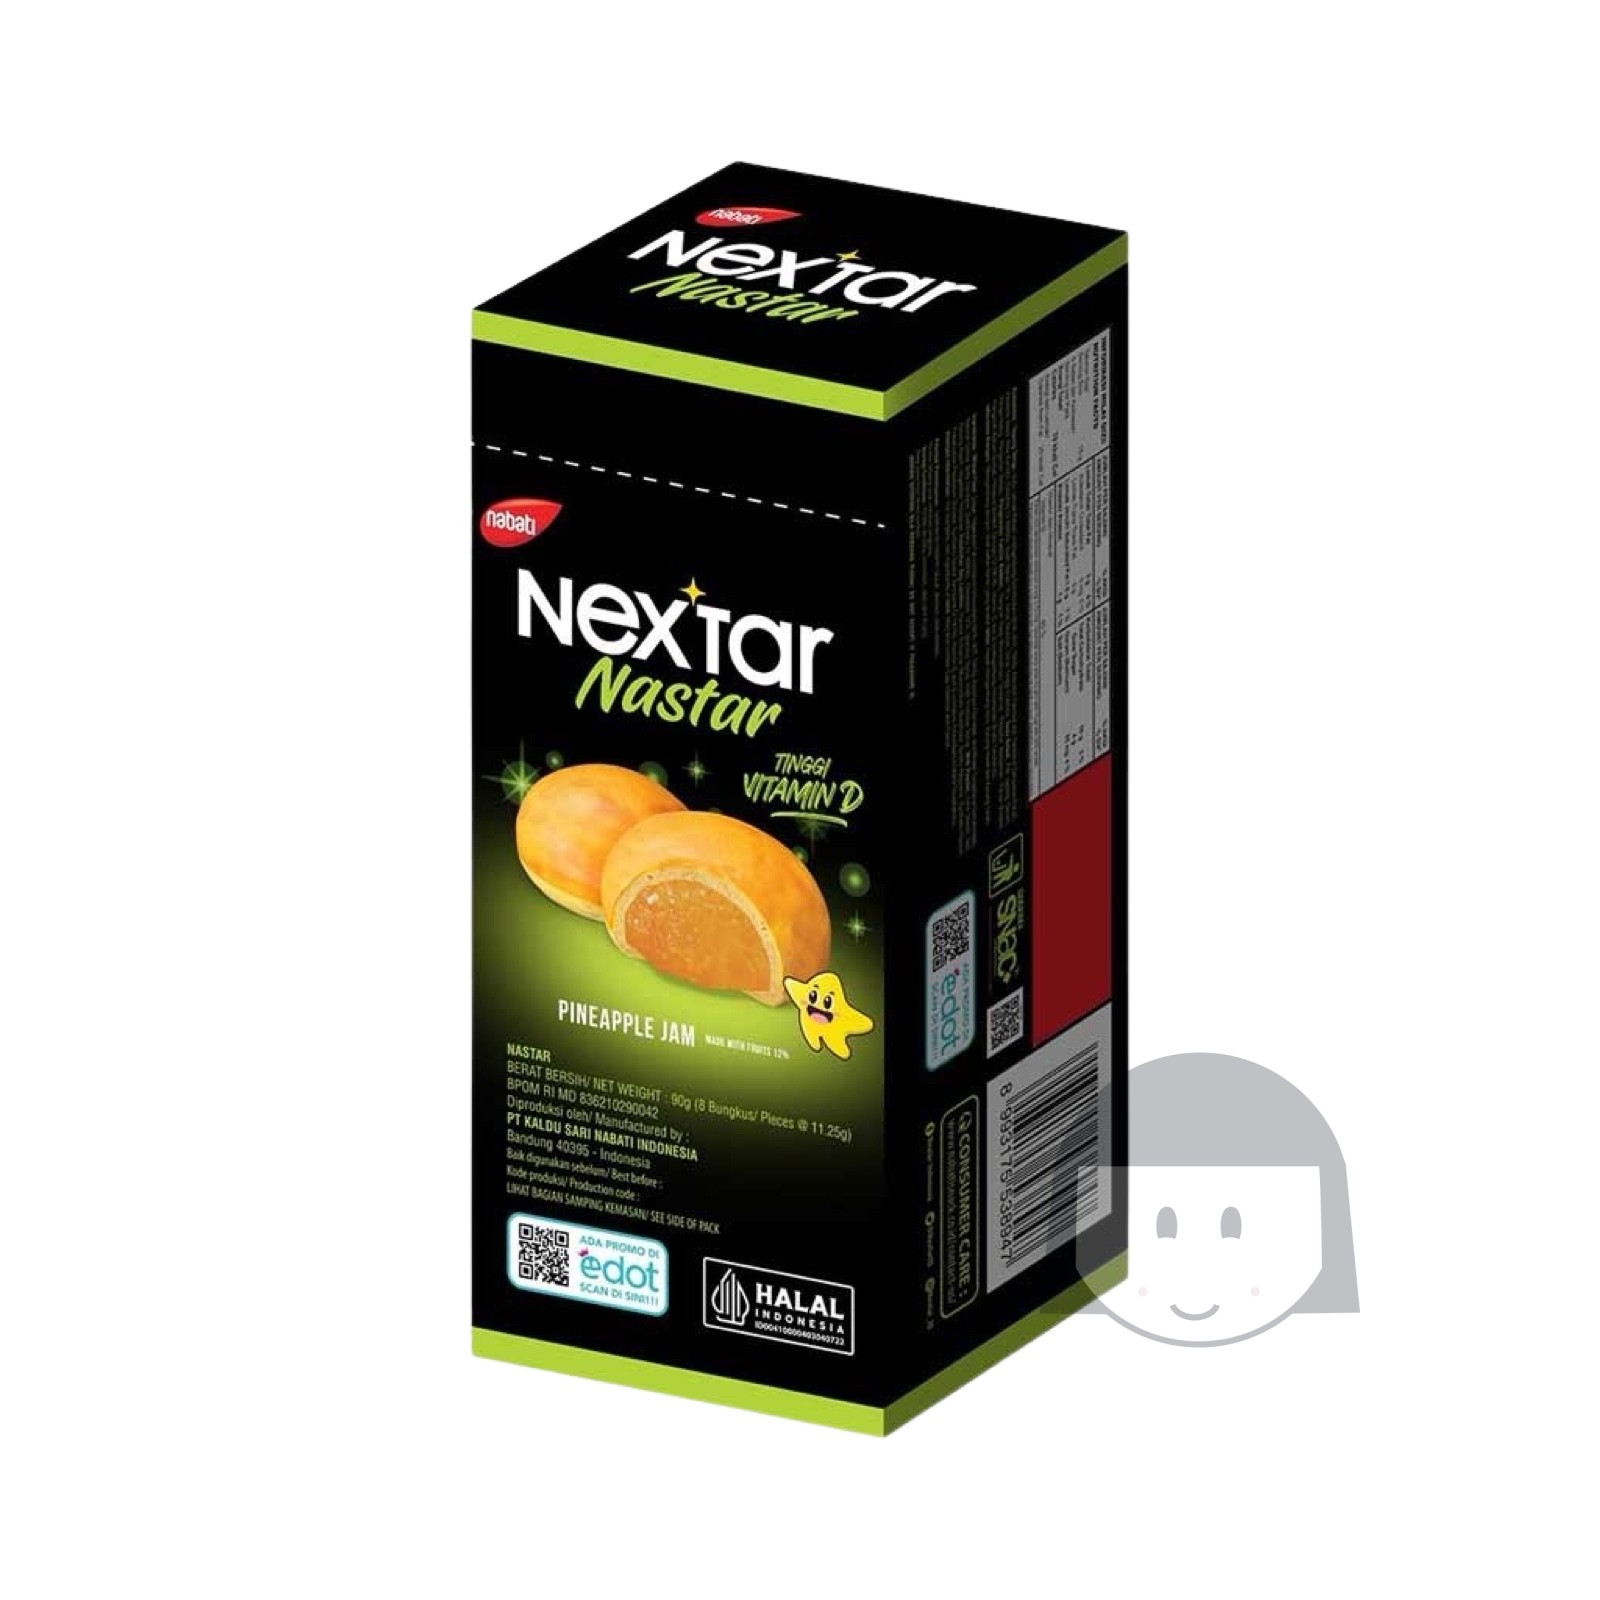 Nabati Nextar Nastar 90 gr Limited Products